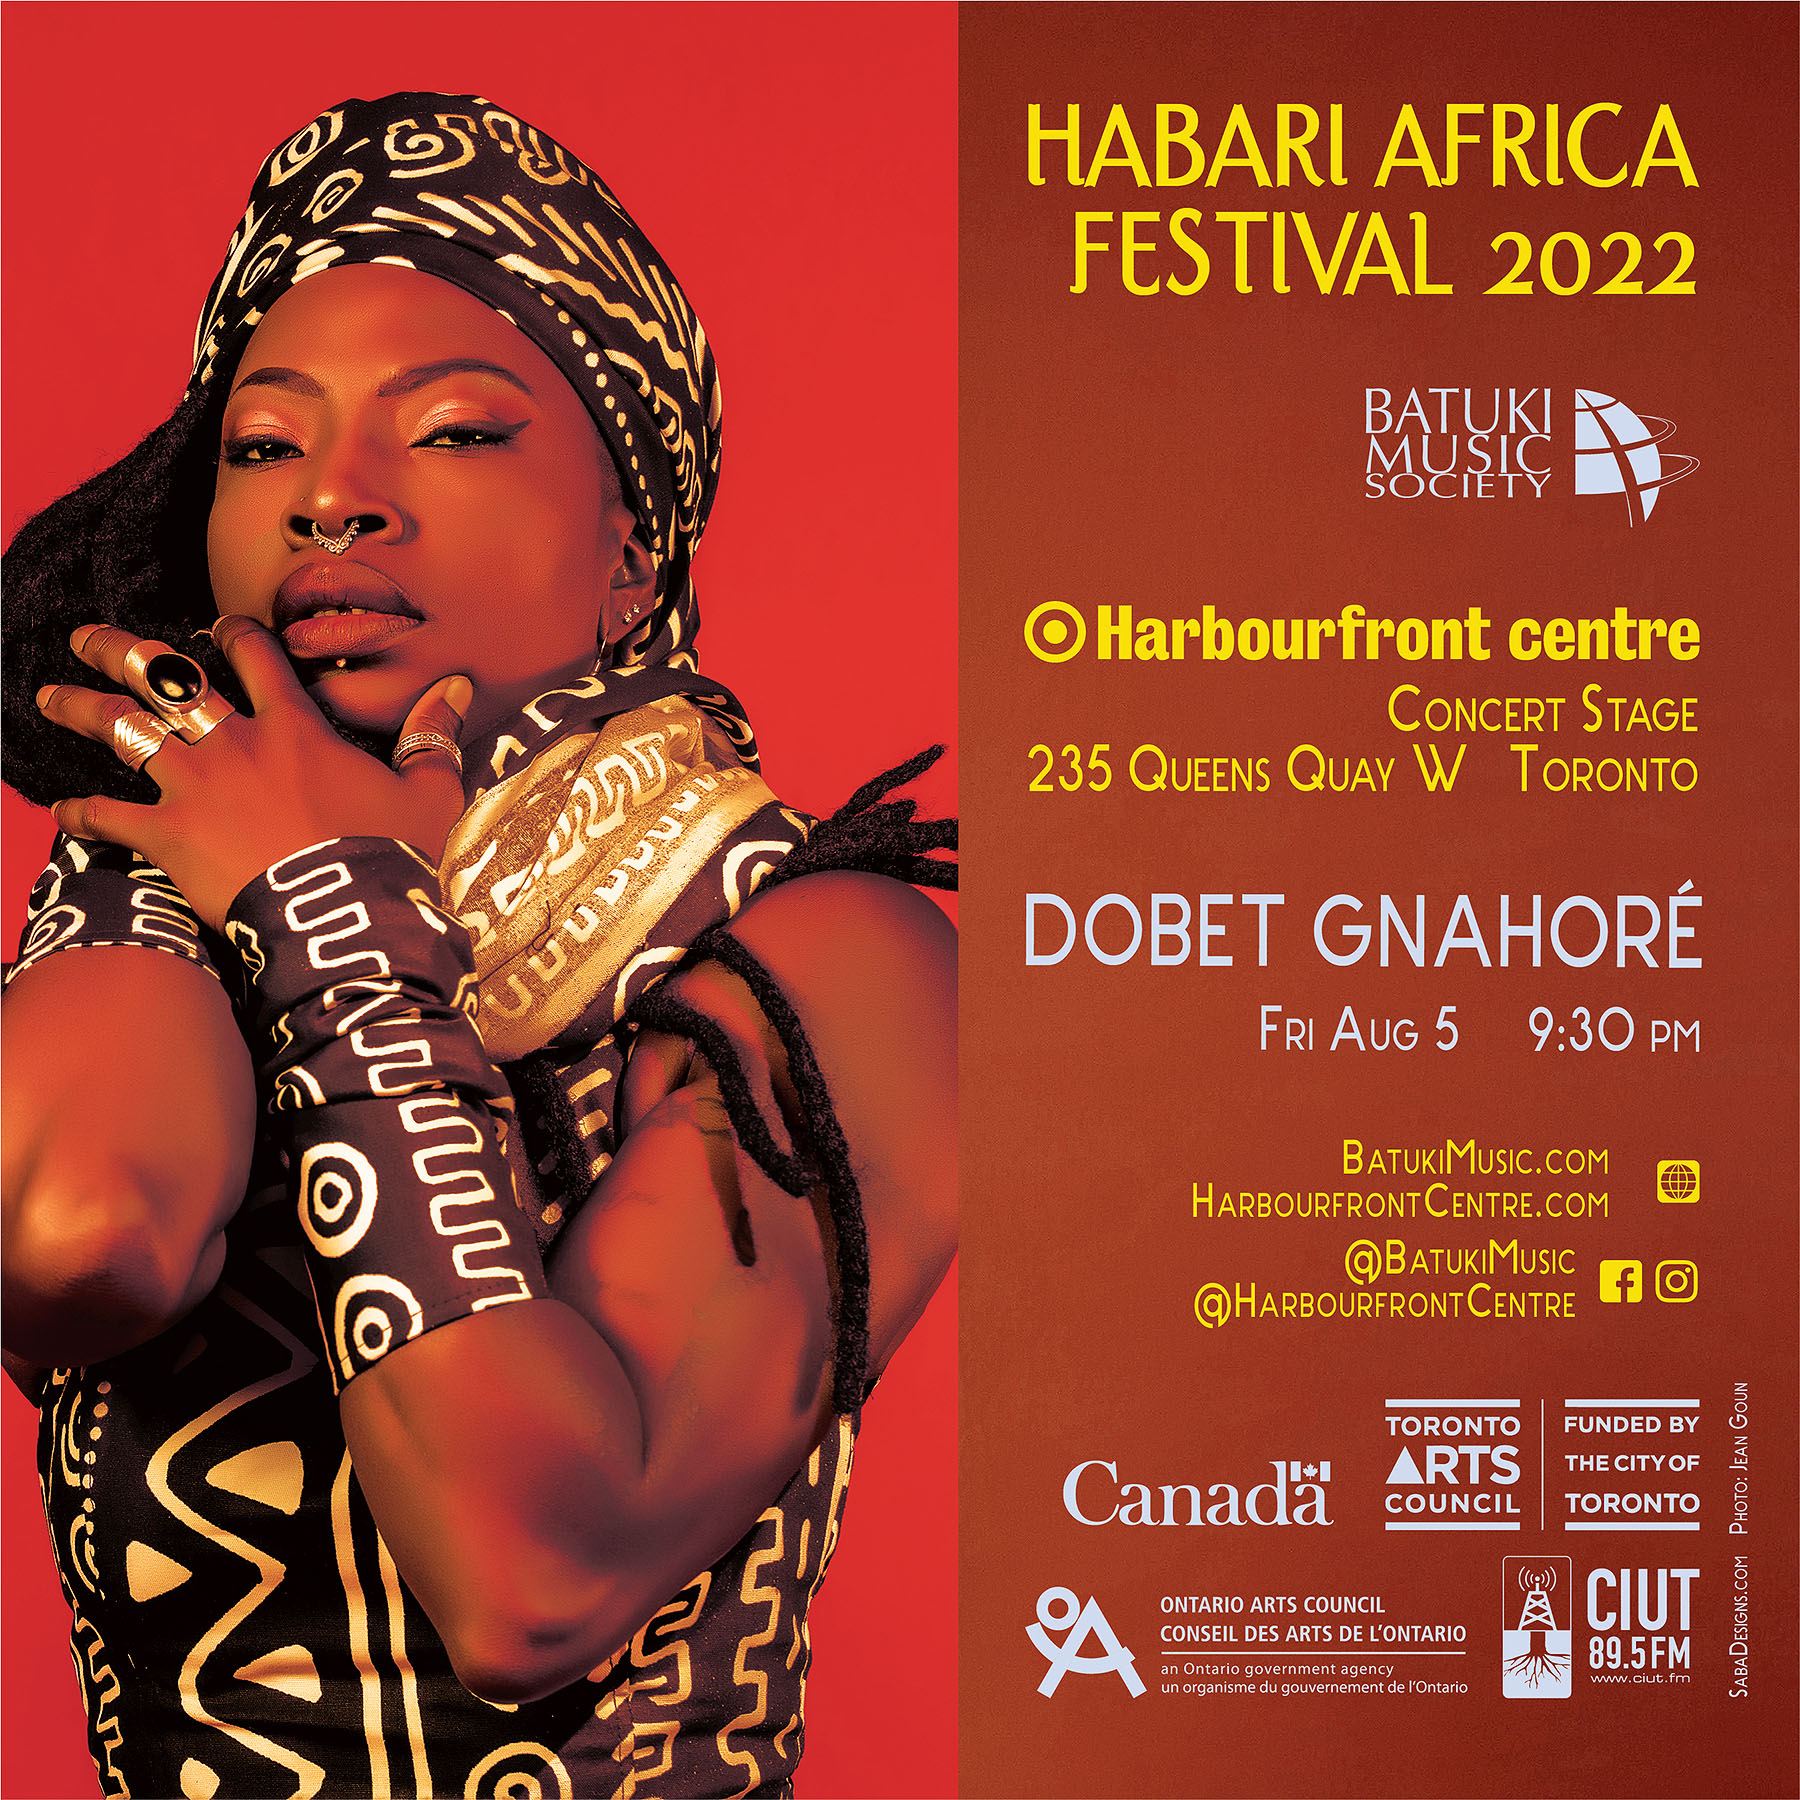 Habari Africa Live Festival 2022 by Batuki Music Society Dobet Gnahore